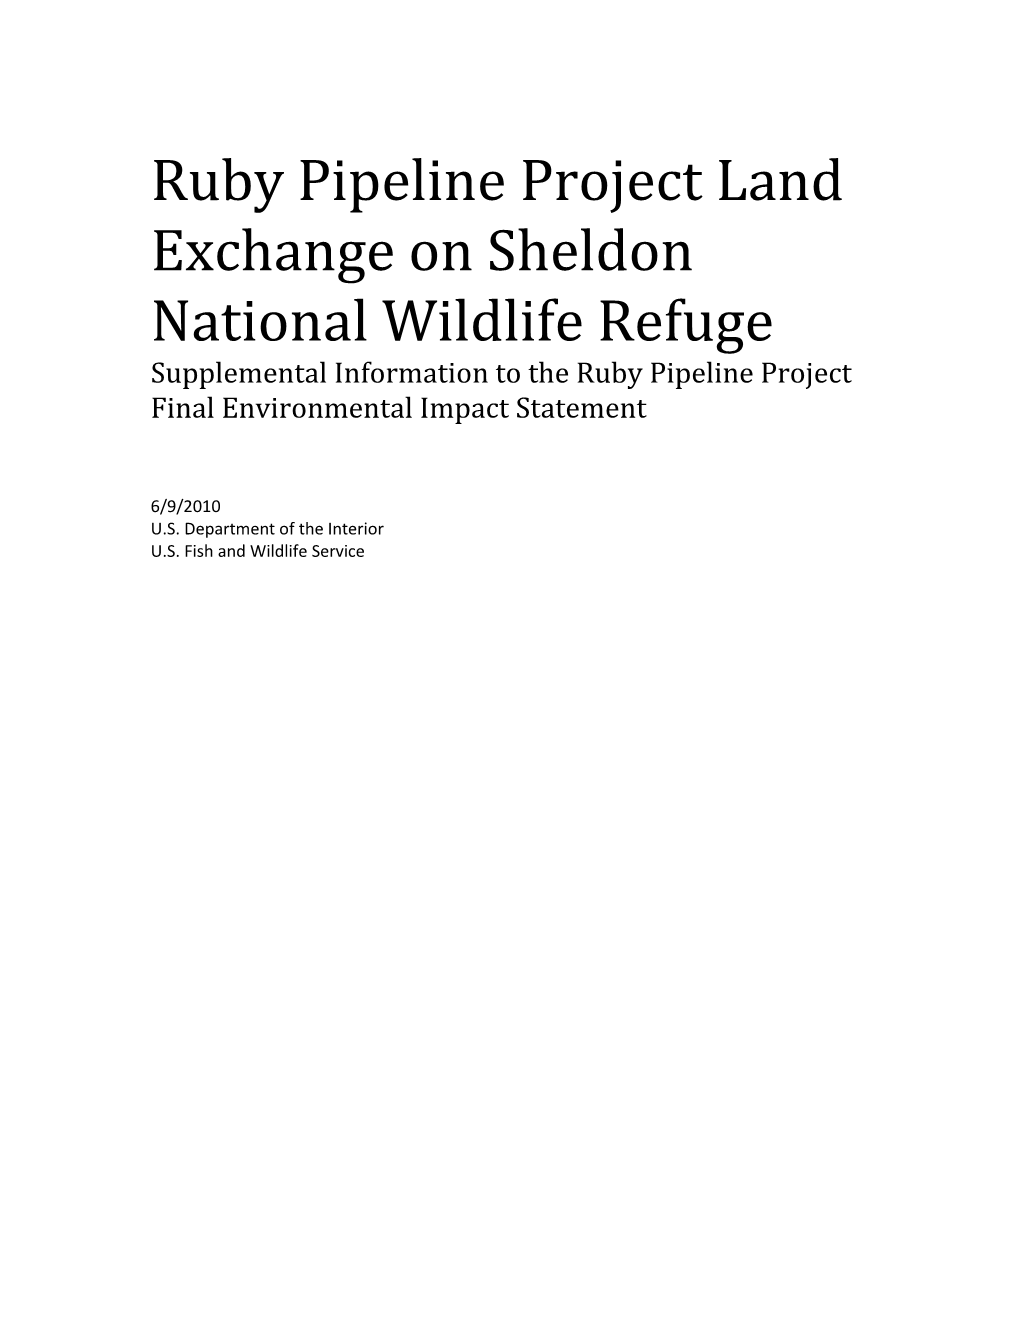 Ruby Pipeline Project Land Exchange on Sheldon National Wildlife Refuge Supplemental Information to the Ruby Pipeline Project Final Environmental Impact Statement